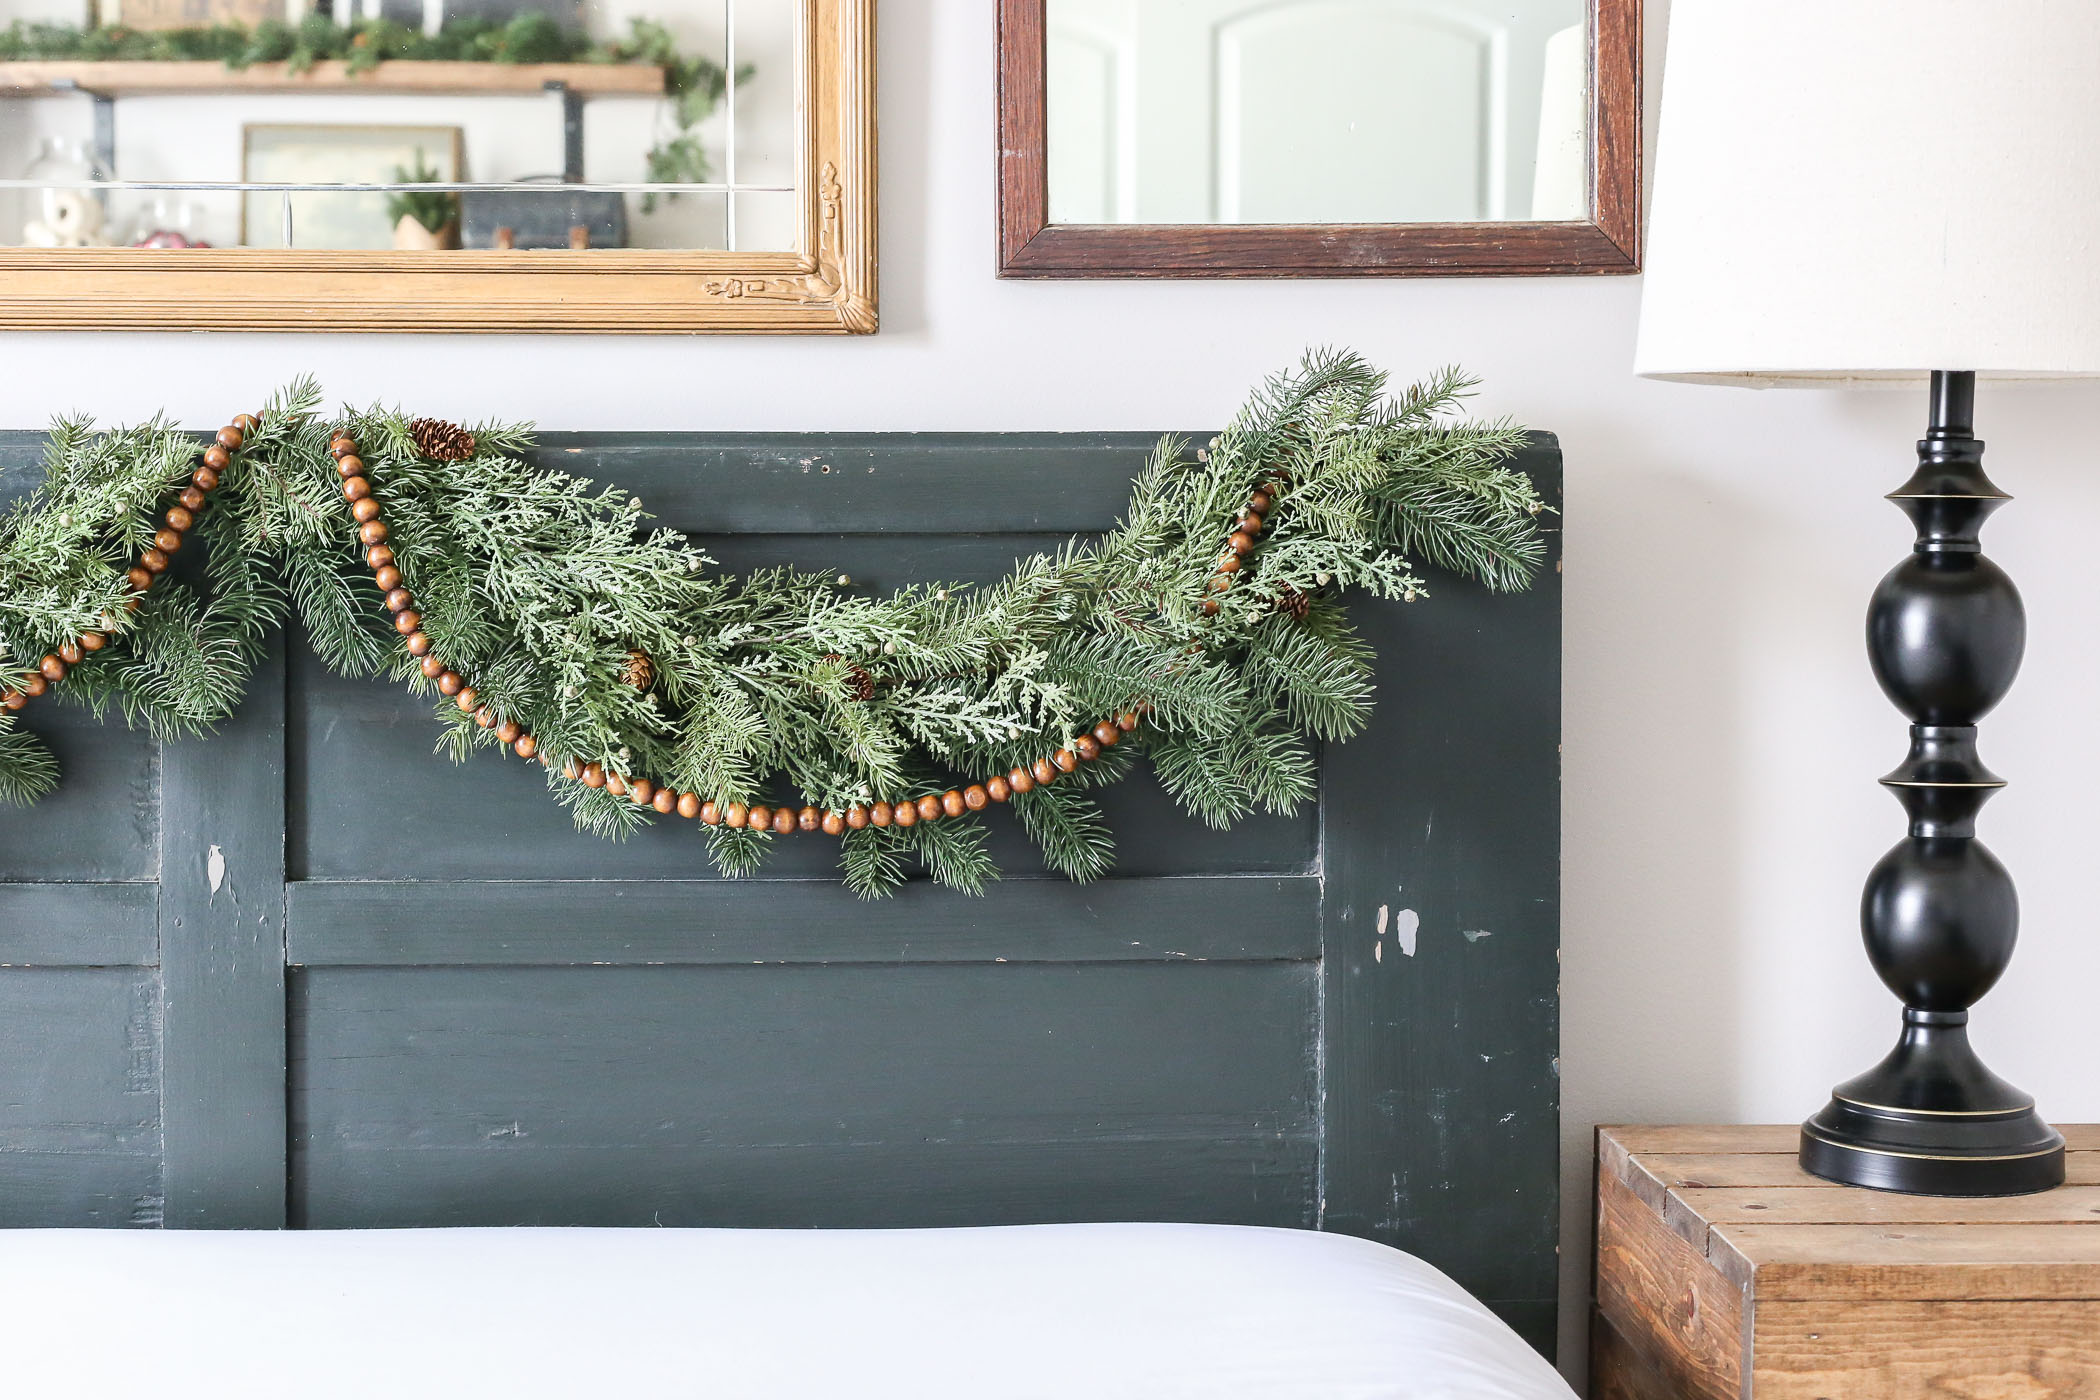 How to Hang Christmas Garland on a Bedroom Headboard